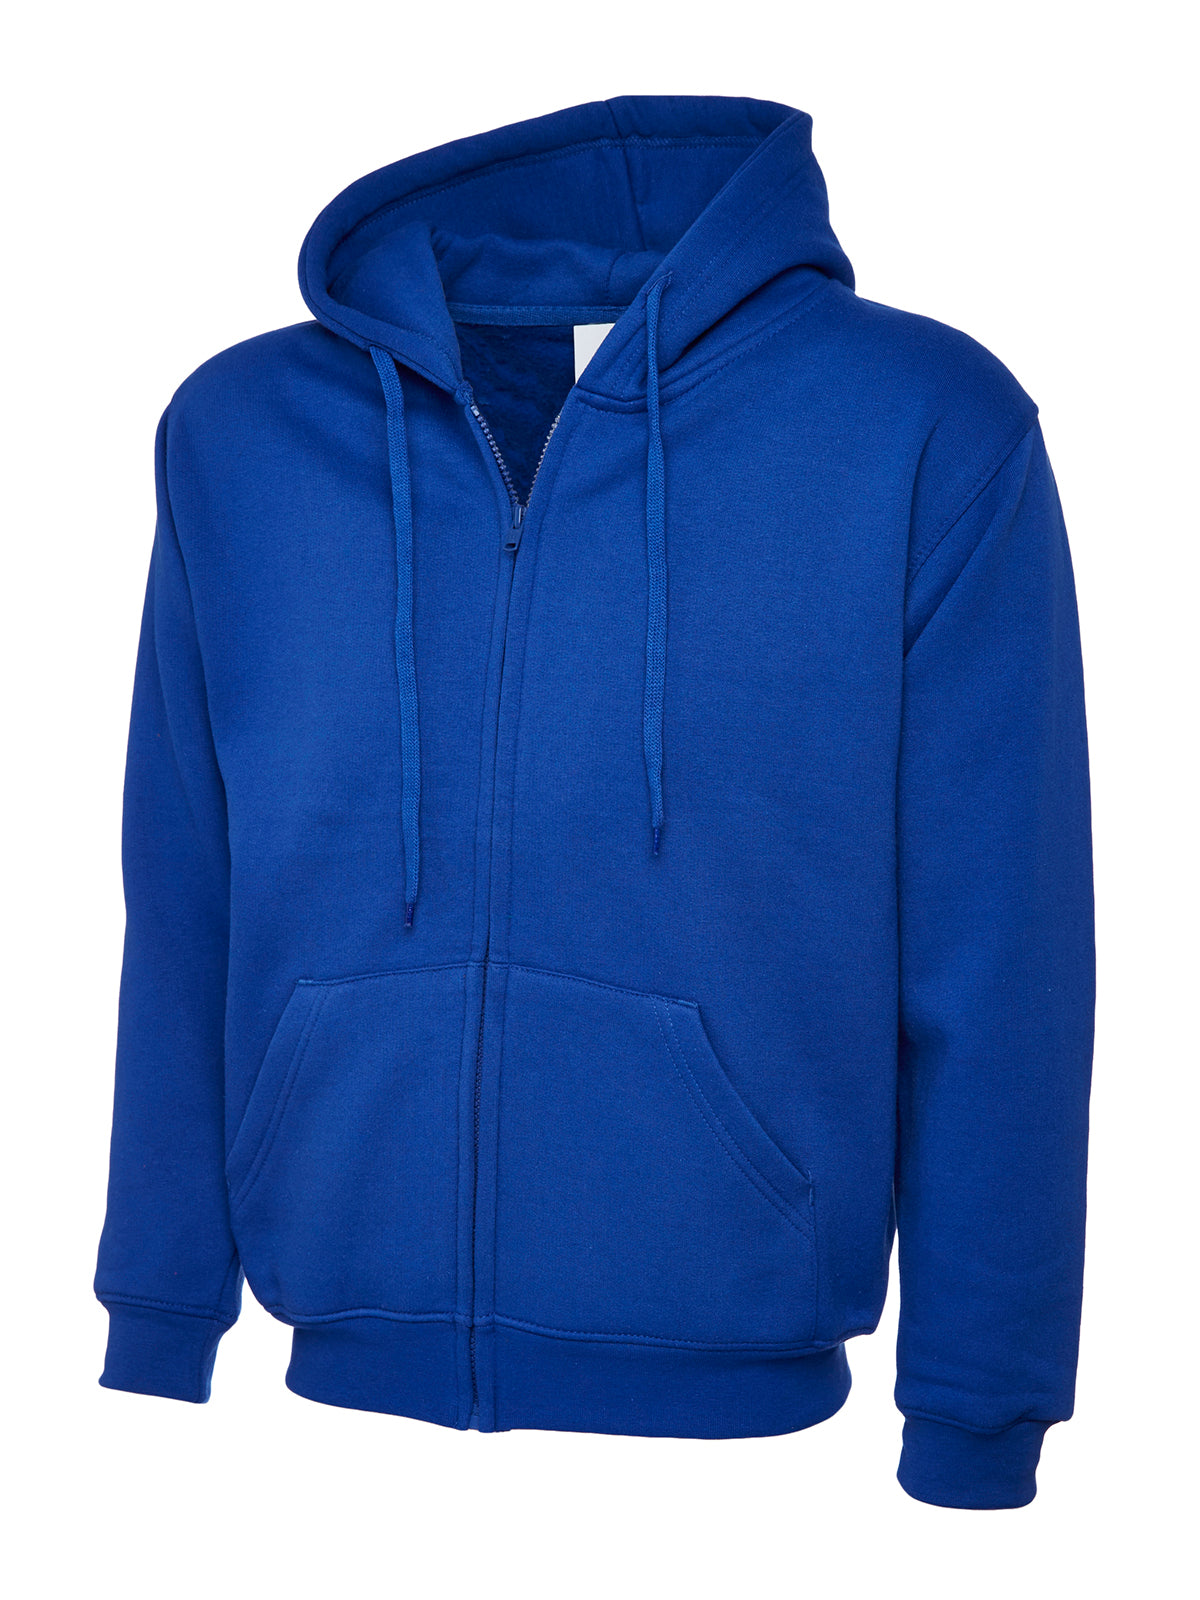 Uneek Adults Unisex Classic Full Zip Hooded Sweatshirt UC504 - Royal